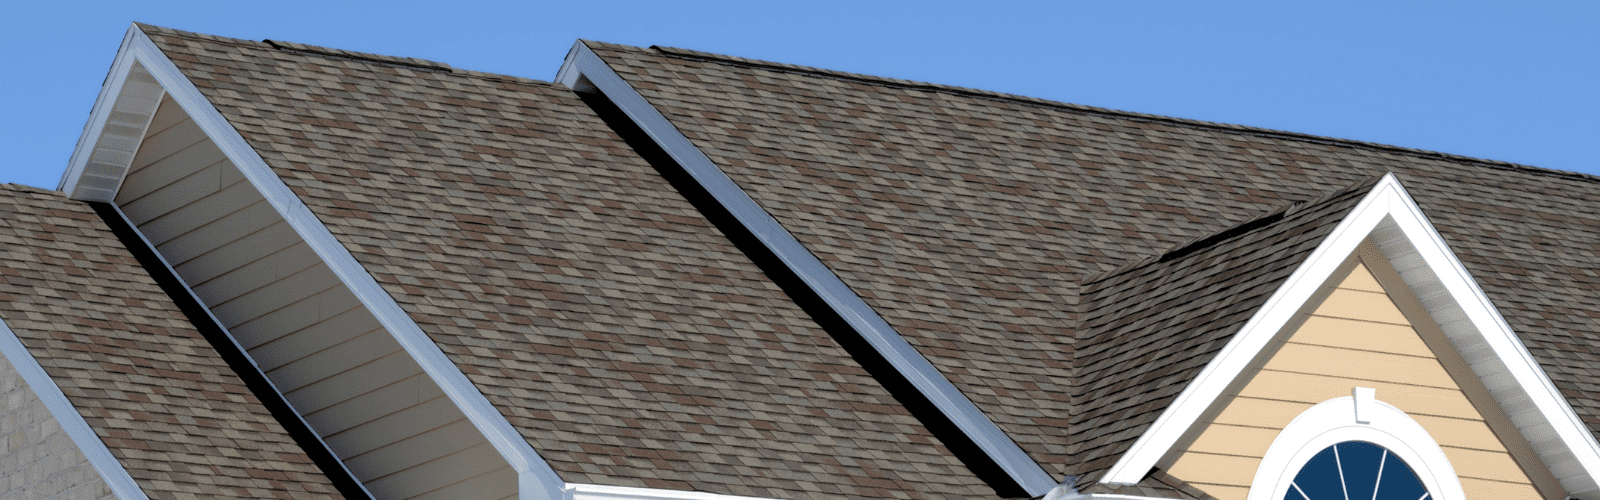 Roof Repairs in Ontario